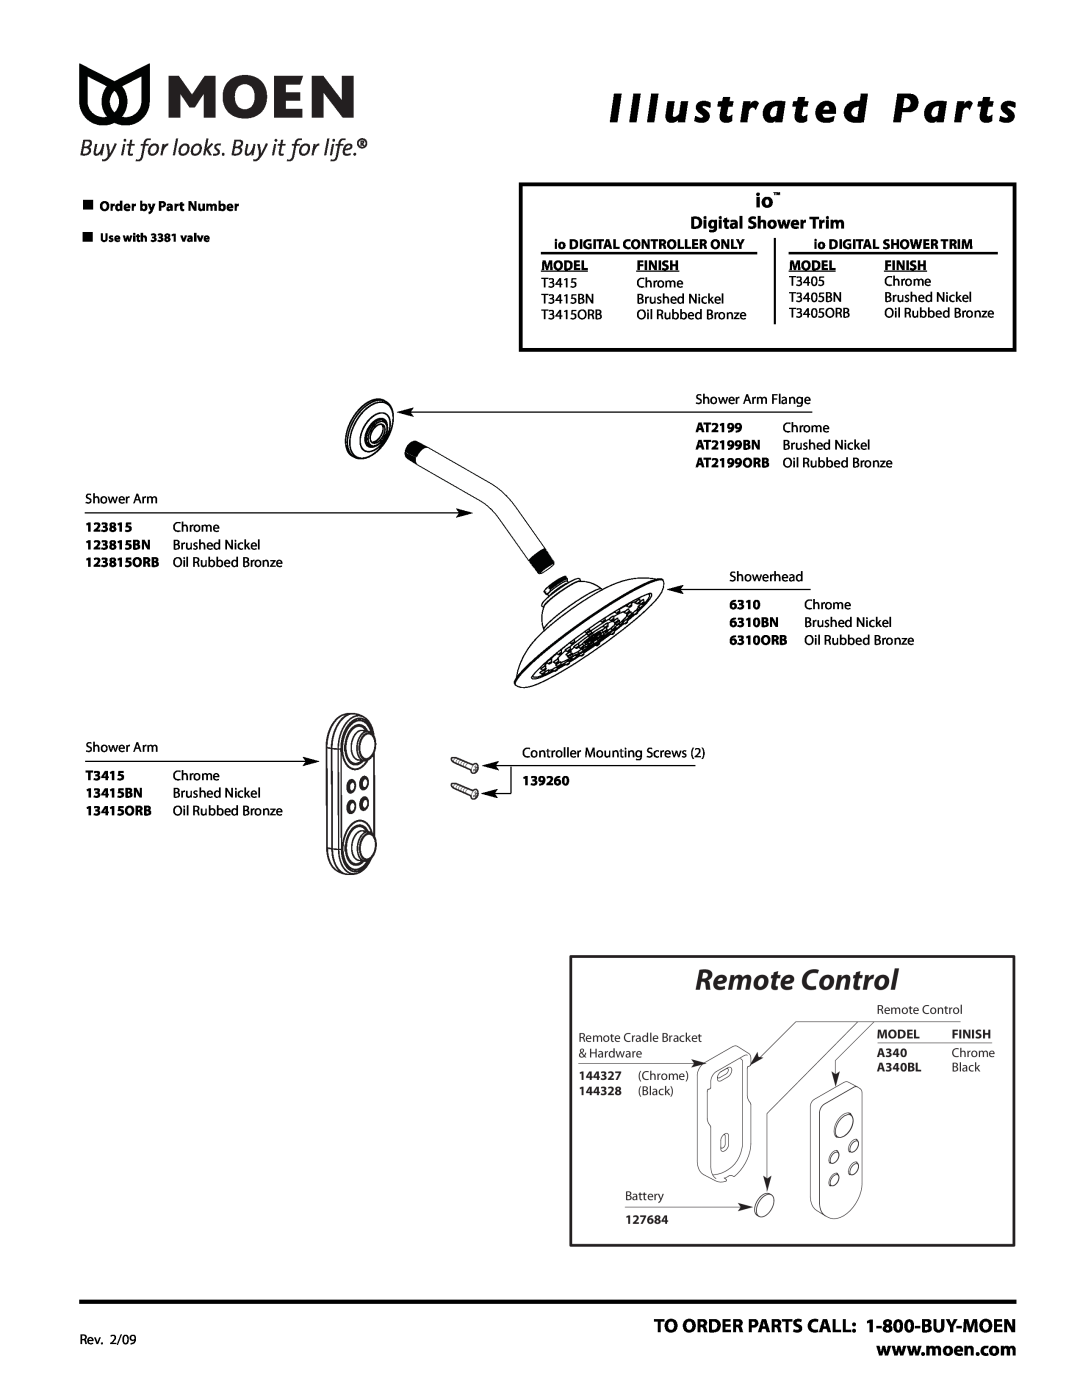 Moen T3405BN, T3415 manual Illustrated Par ts, Remote Control, TO ORDER PARTS CALL 1-800-BUY-MOEN, Digital Shower Trim 